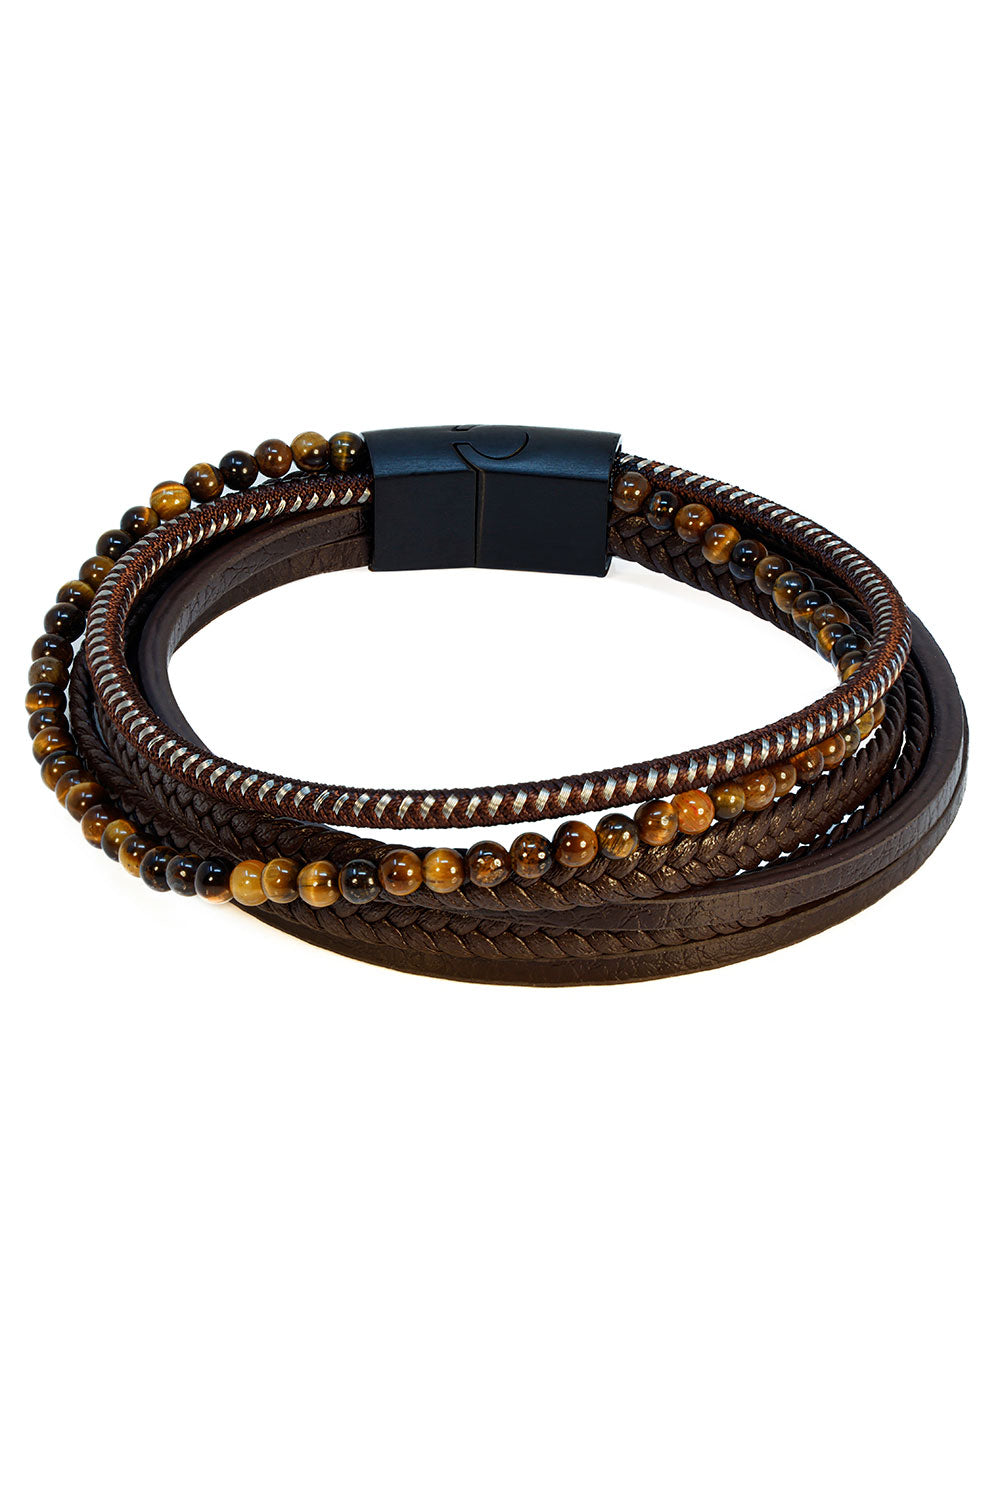 Barabas Unisex Rope Multi-Layer Braided Leather Bracelets 4BMS10 Coffee